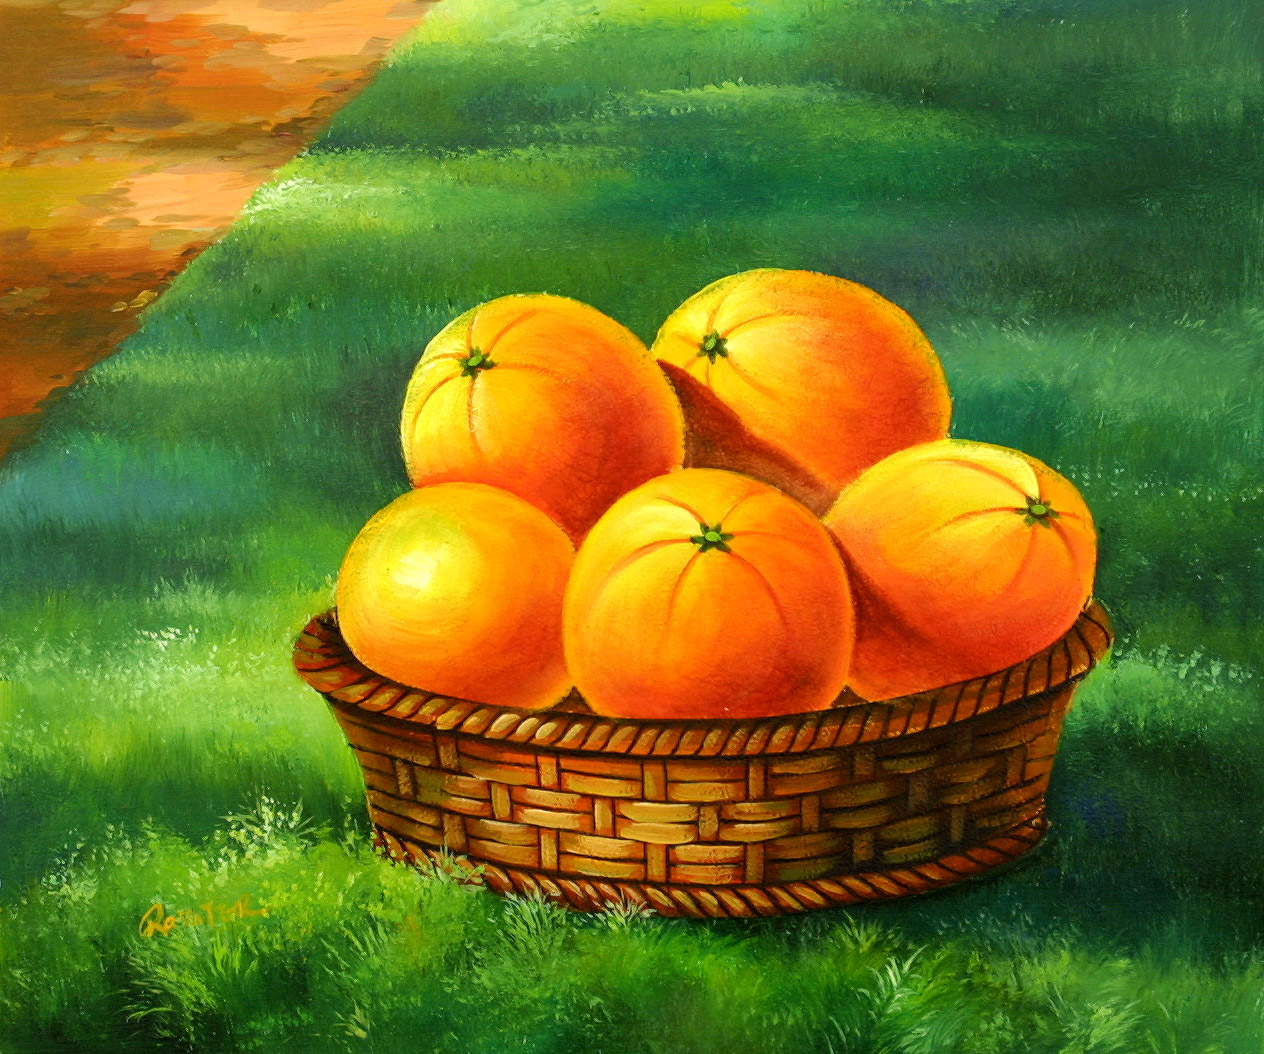 Oranges: An Excellent Power Food